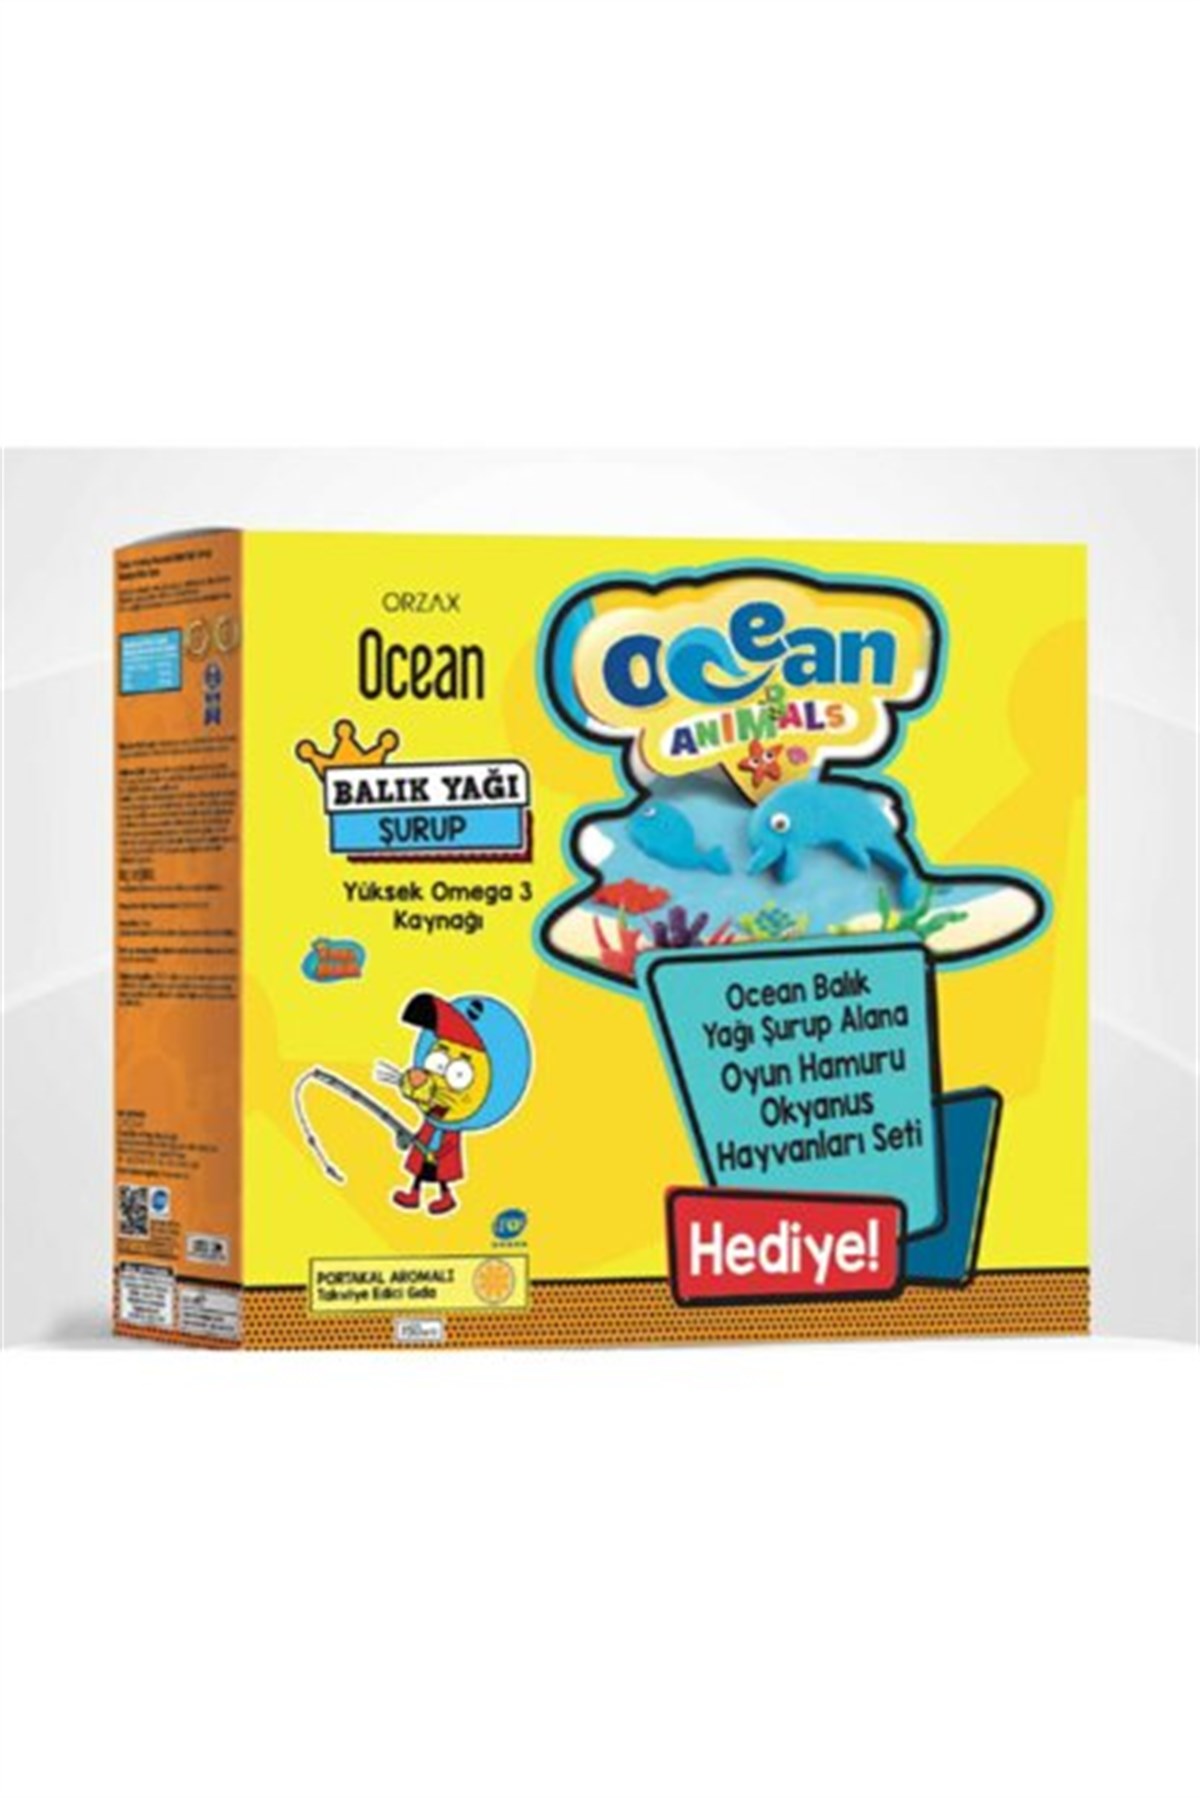 Ocean Fish Oil Syrup + Play Dough Ocean Animal Kit-LeylekKapida.com